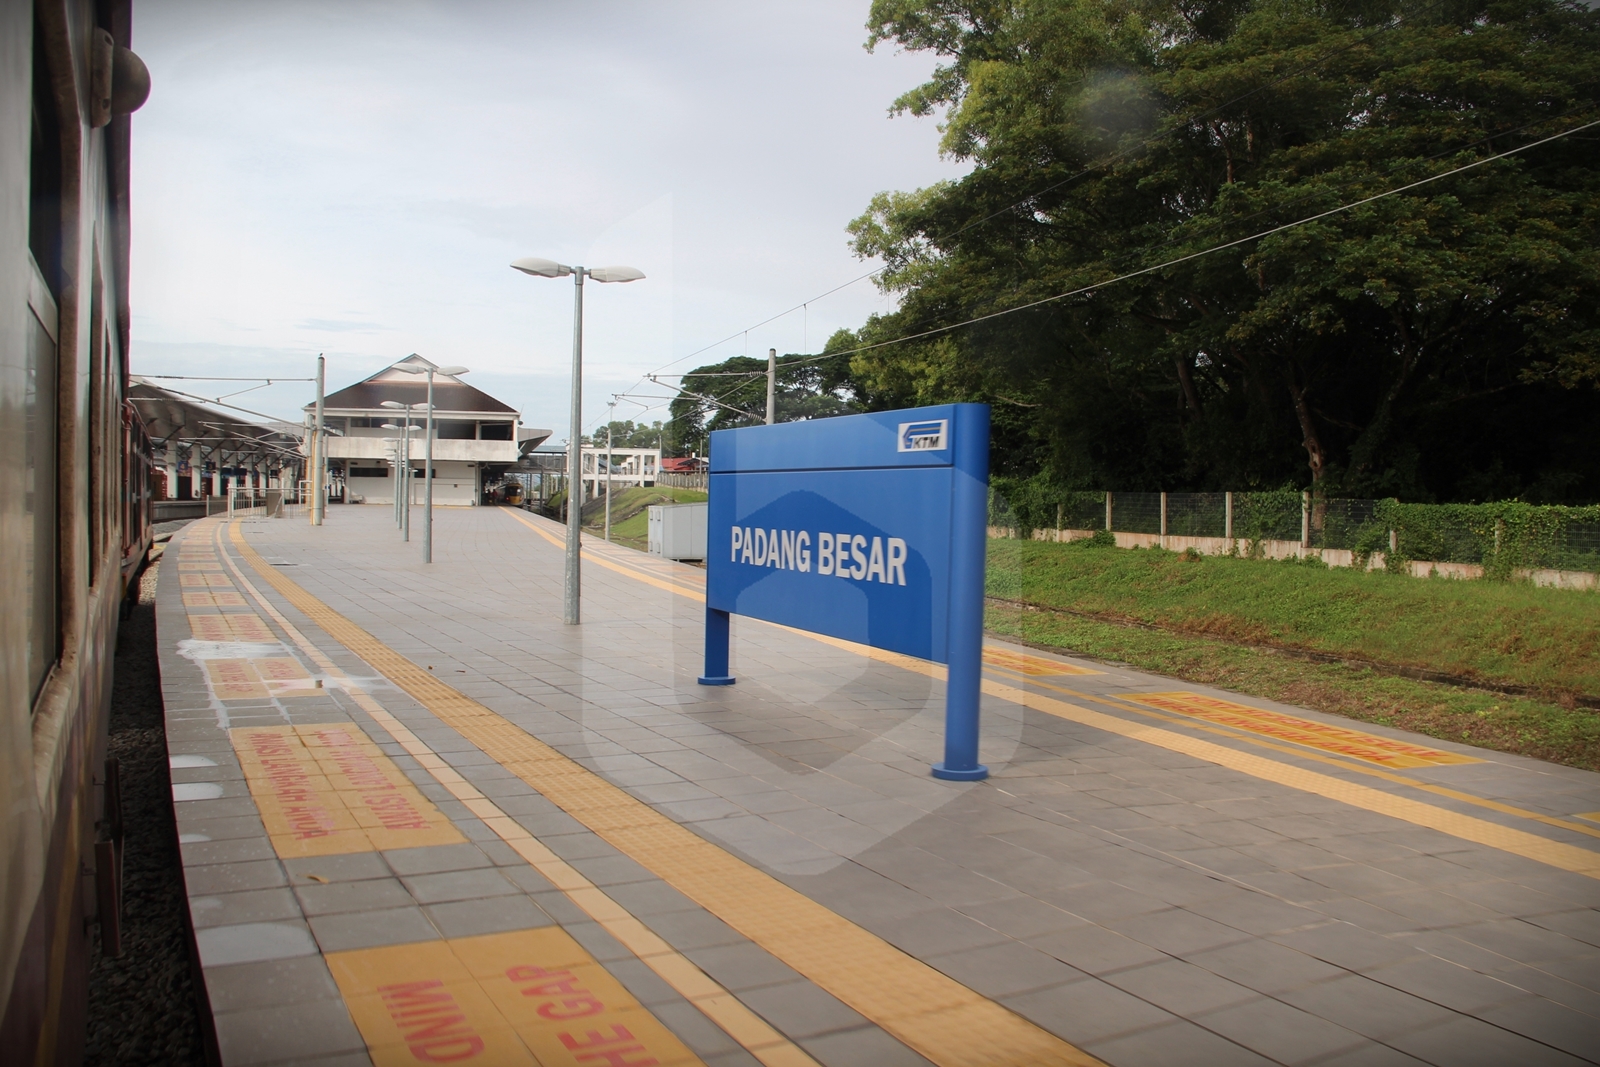 Hat Yai to Padang Besar by train